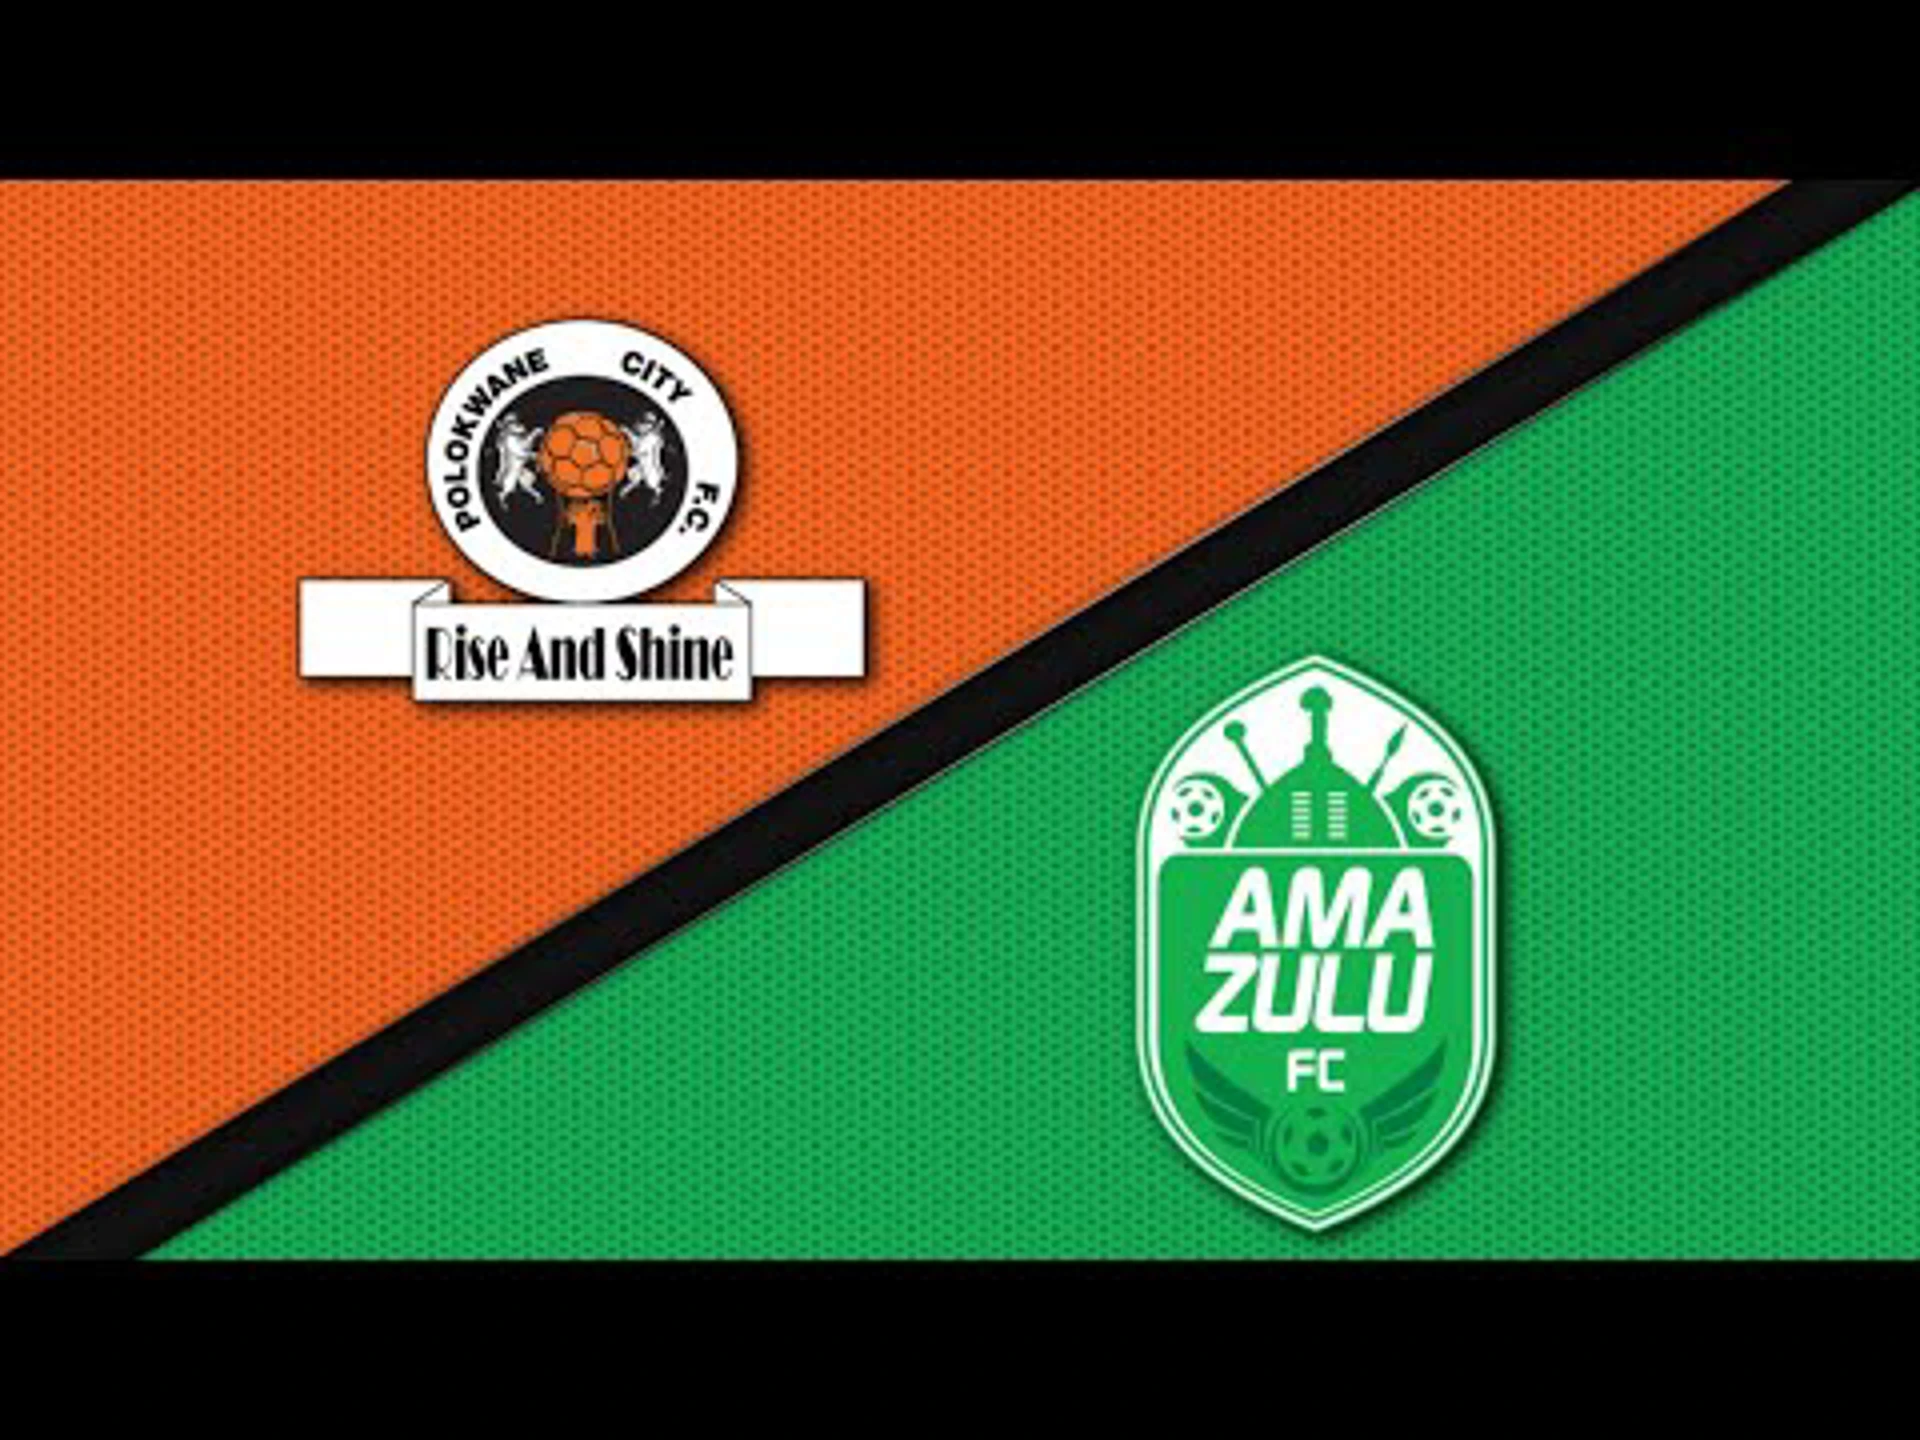 Polokwane City v AmaZulu | 90 in 90 | DStv Premiership | Highlights